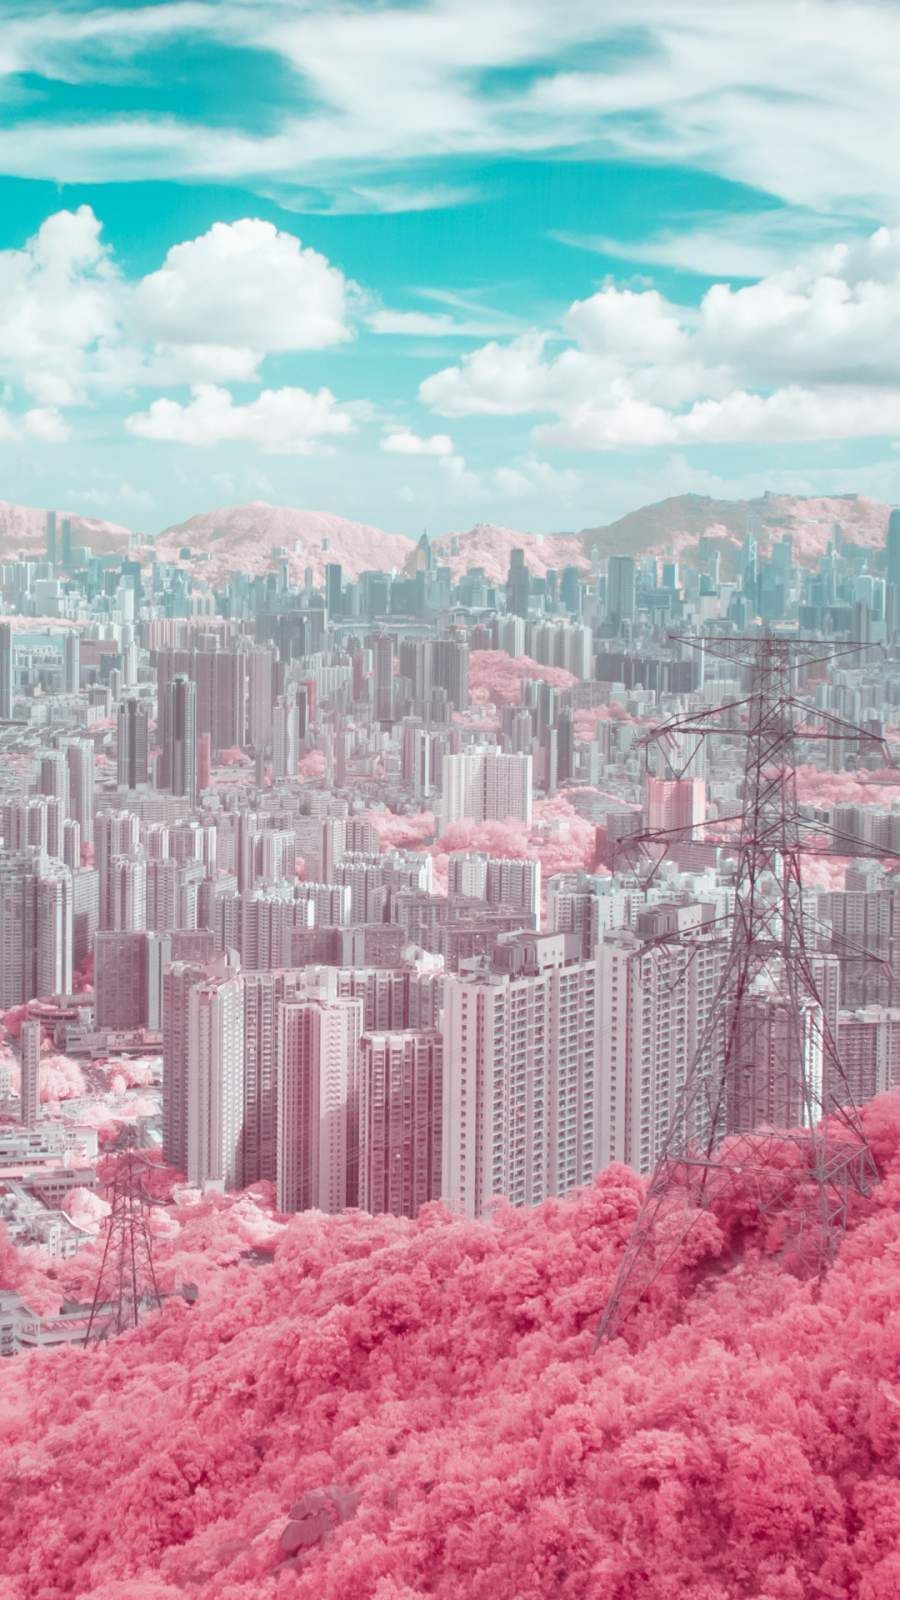  IPhone Stadt Hintergrundbild 900x1600. Anime City iPhone Wallpaper. City iphone wallpaper, iPhone wallpaper scenery, Anime city